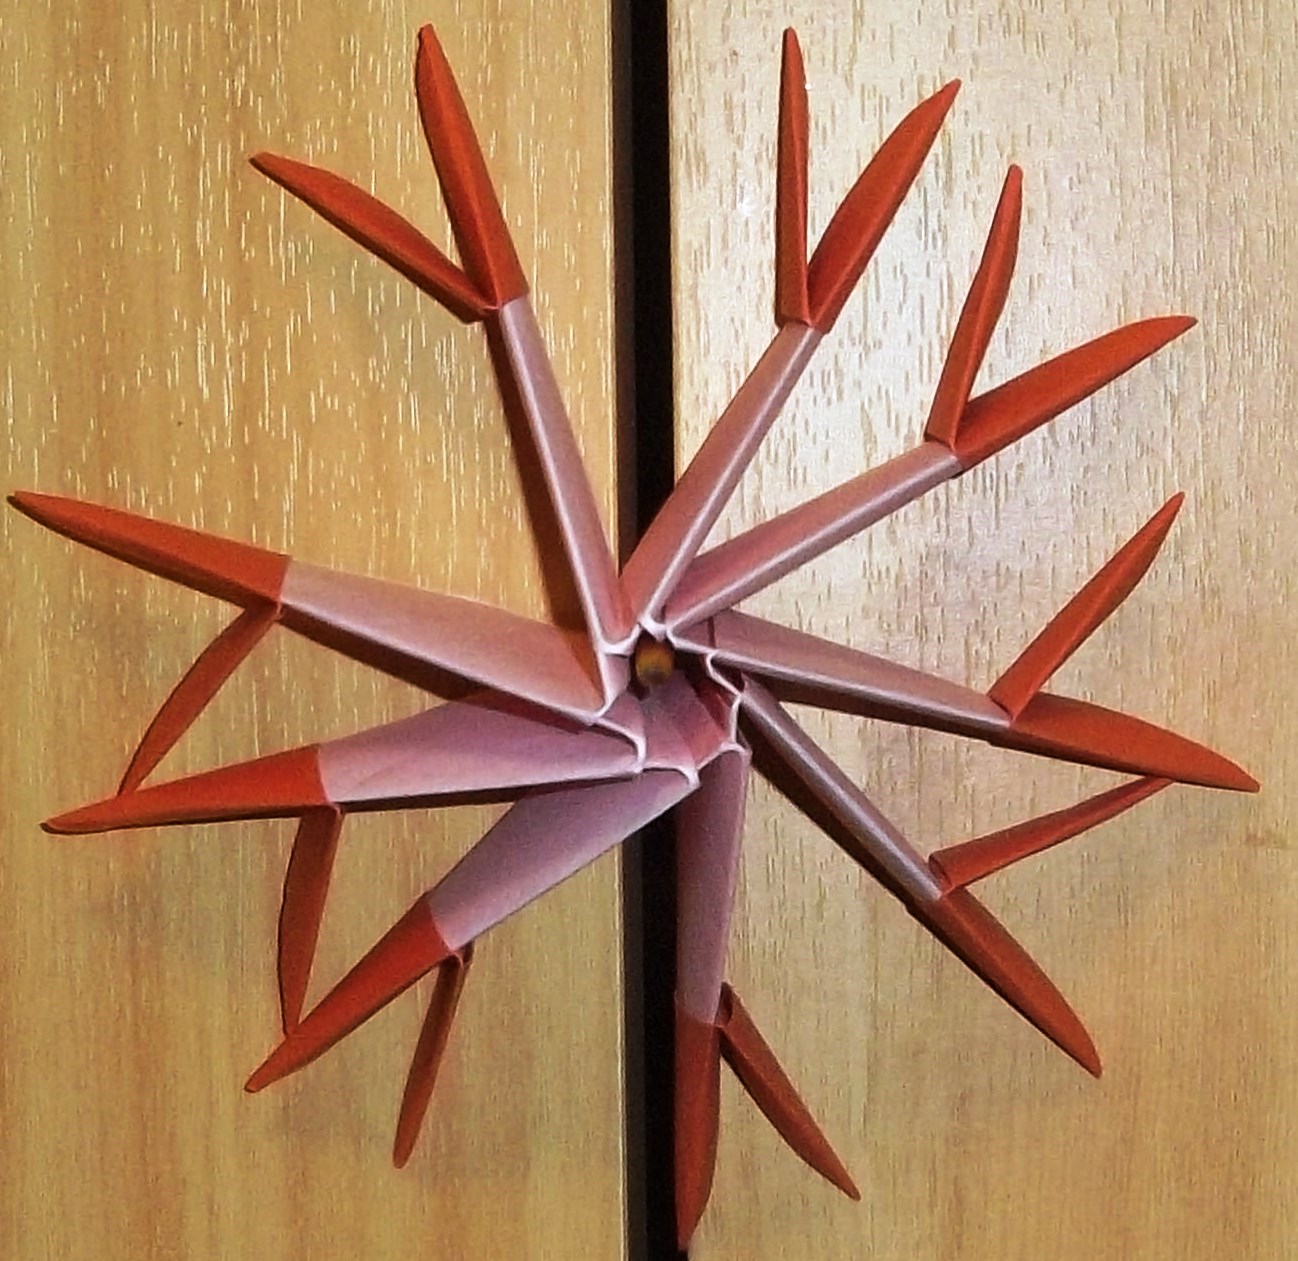 Технология интеграции геометрии и оригами. ( мастер - класс)